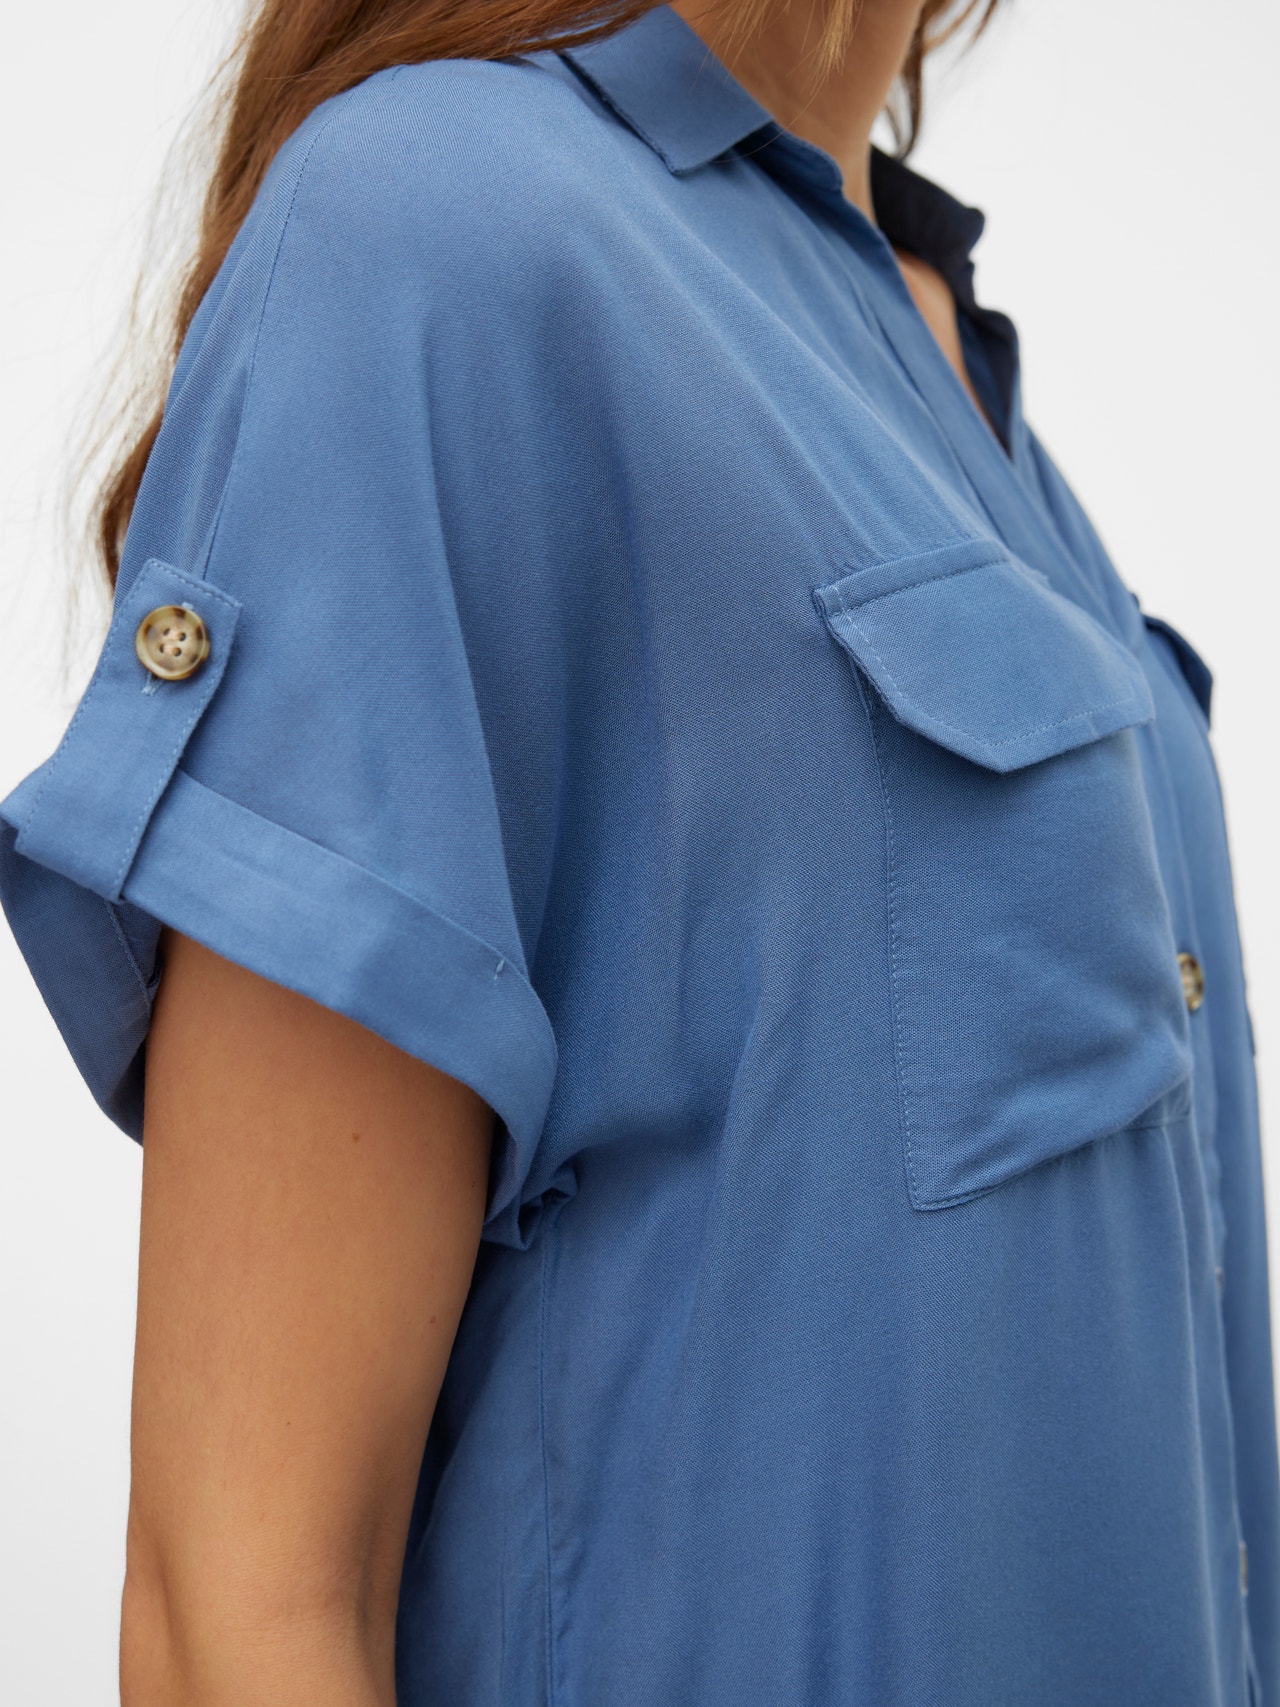 Vero Moda VMBUMPY Shirt -Coronet Blue - 10310139